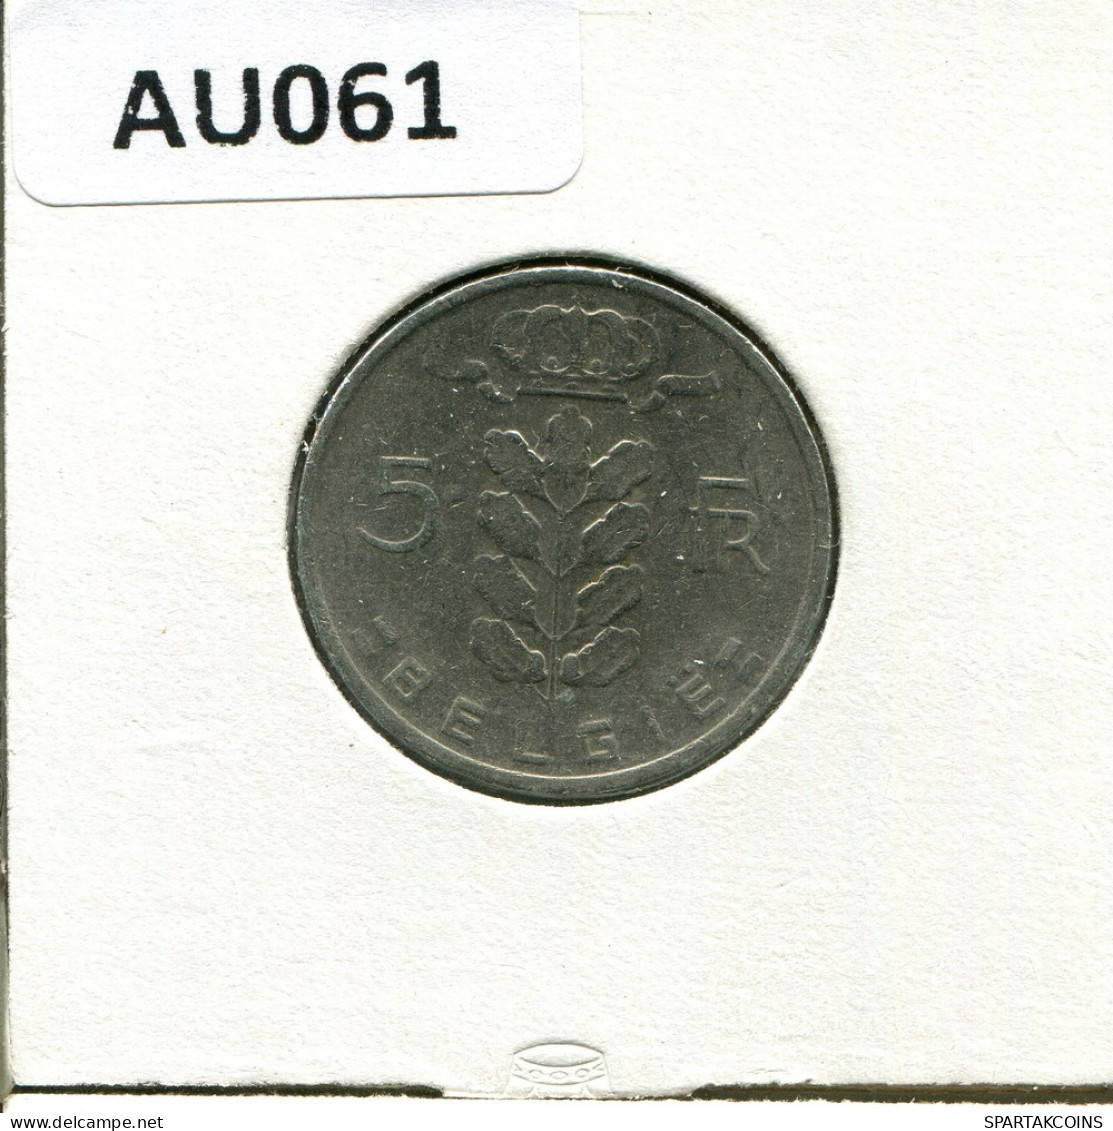 5 FRANCS 1969 DUTCH Text BELGIEN BELGIUM Münze #AU061.D.A - 5 Francs